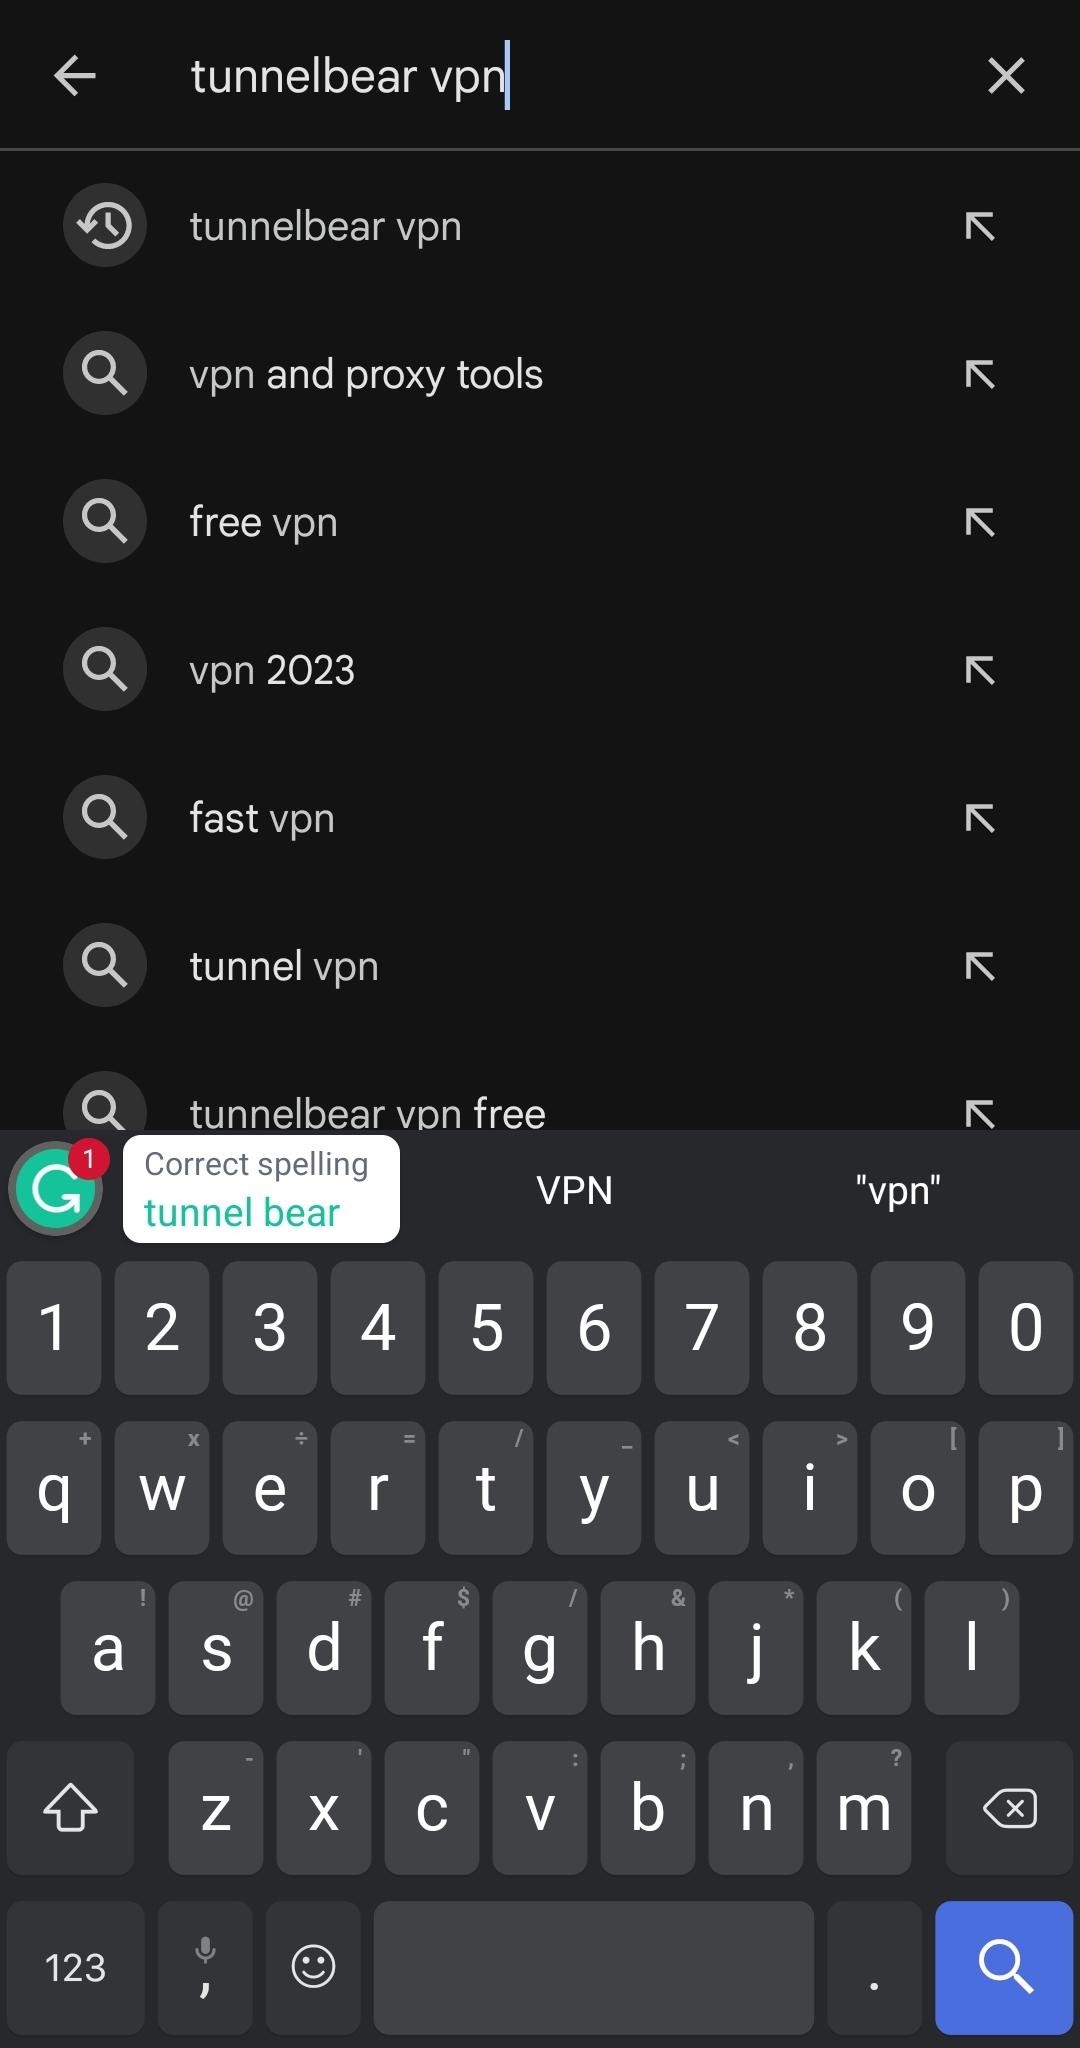 TunnelBear VPN Review 2023 - Pros & Cons